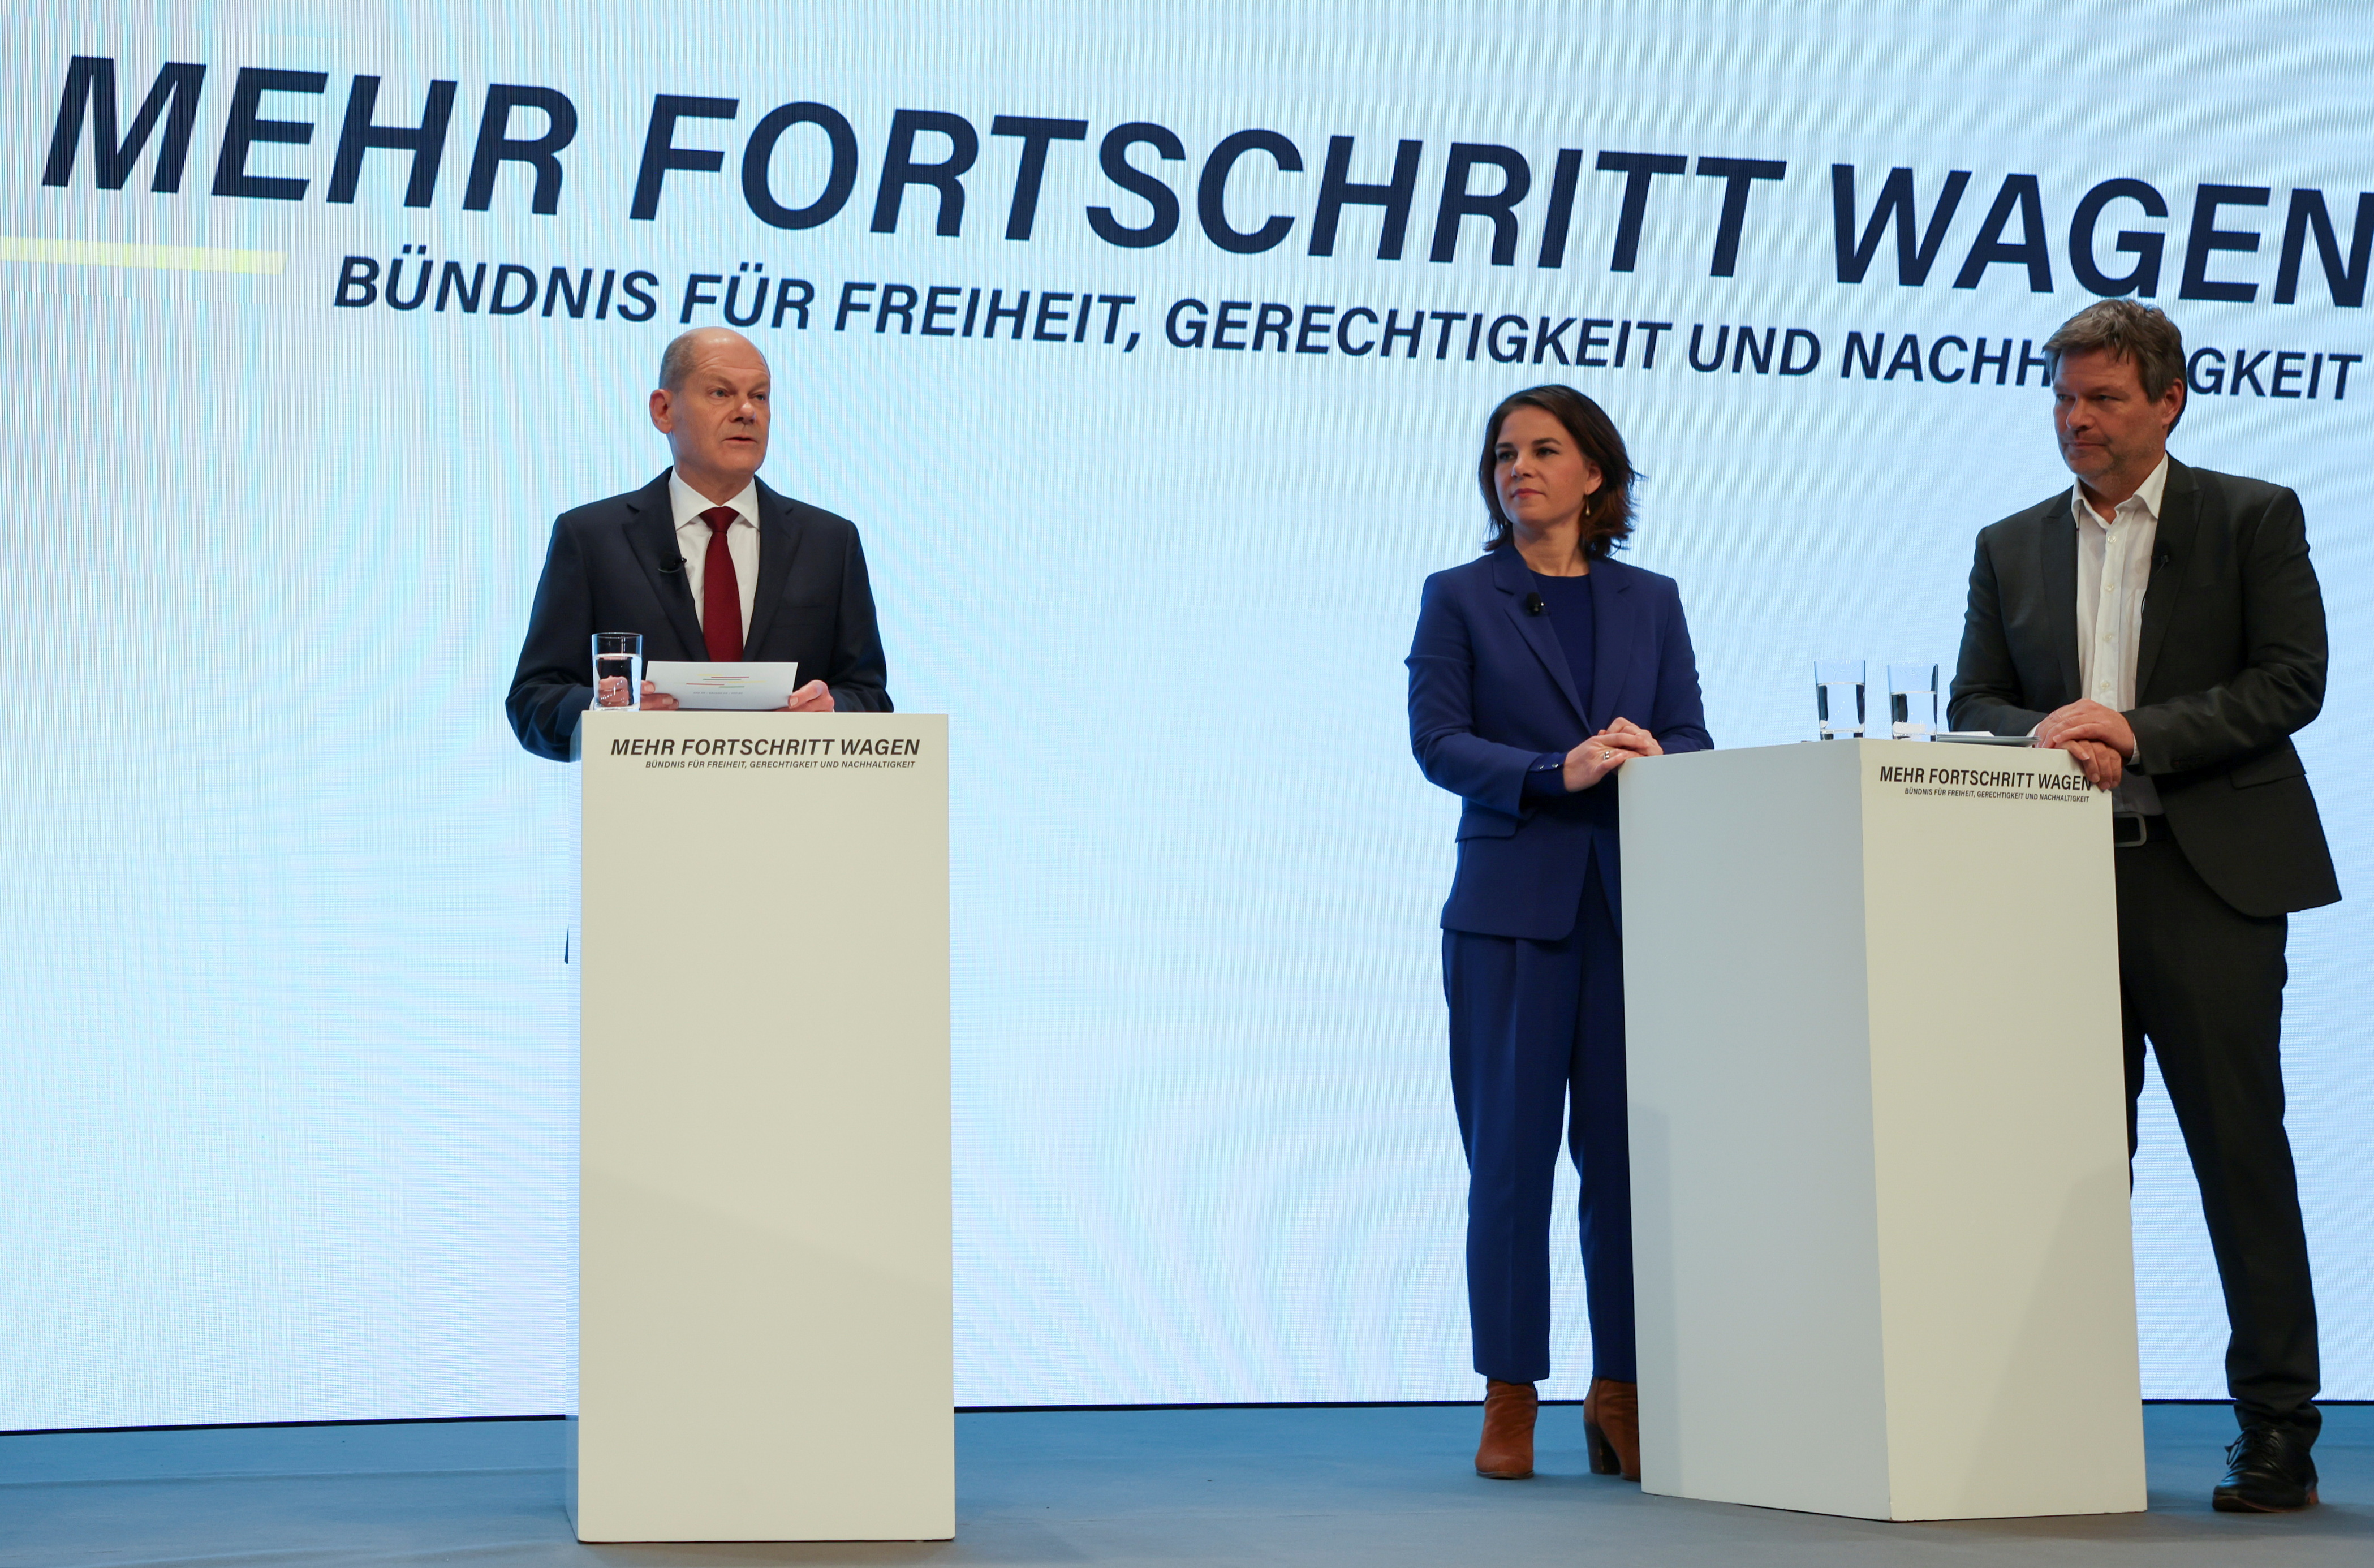 Final round of coalition talks in Berlin